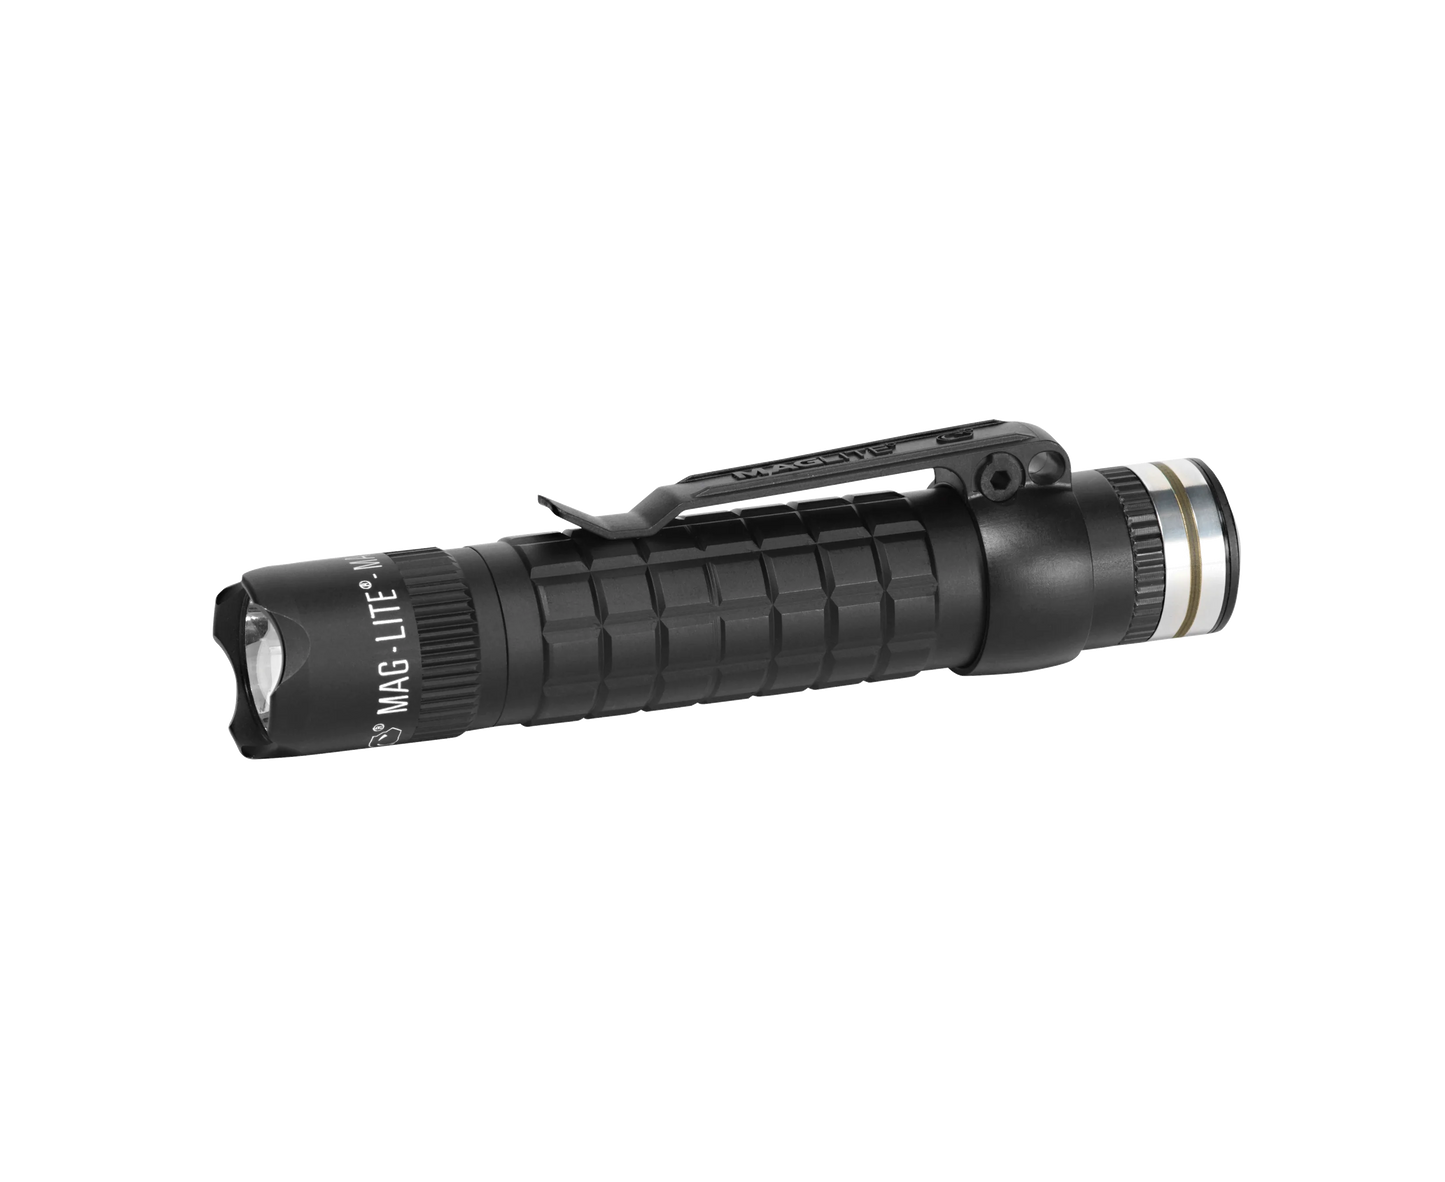 Maglite MAG-TAC LED Rechargeable Flashlight System Crowned Bezel